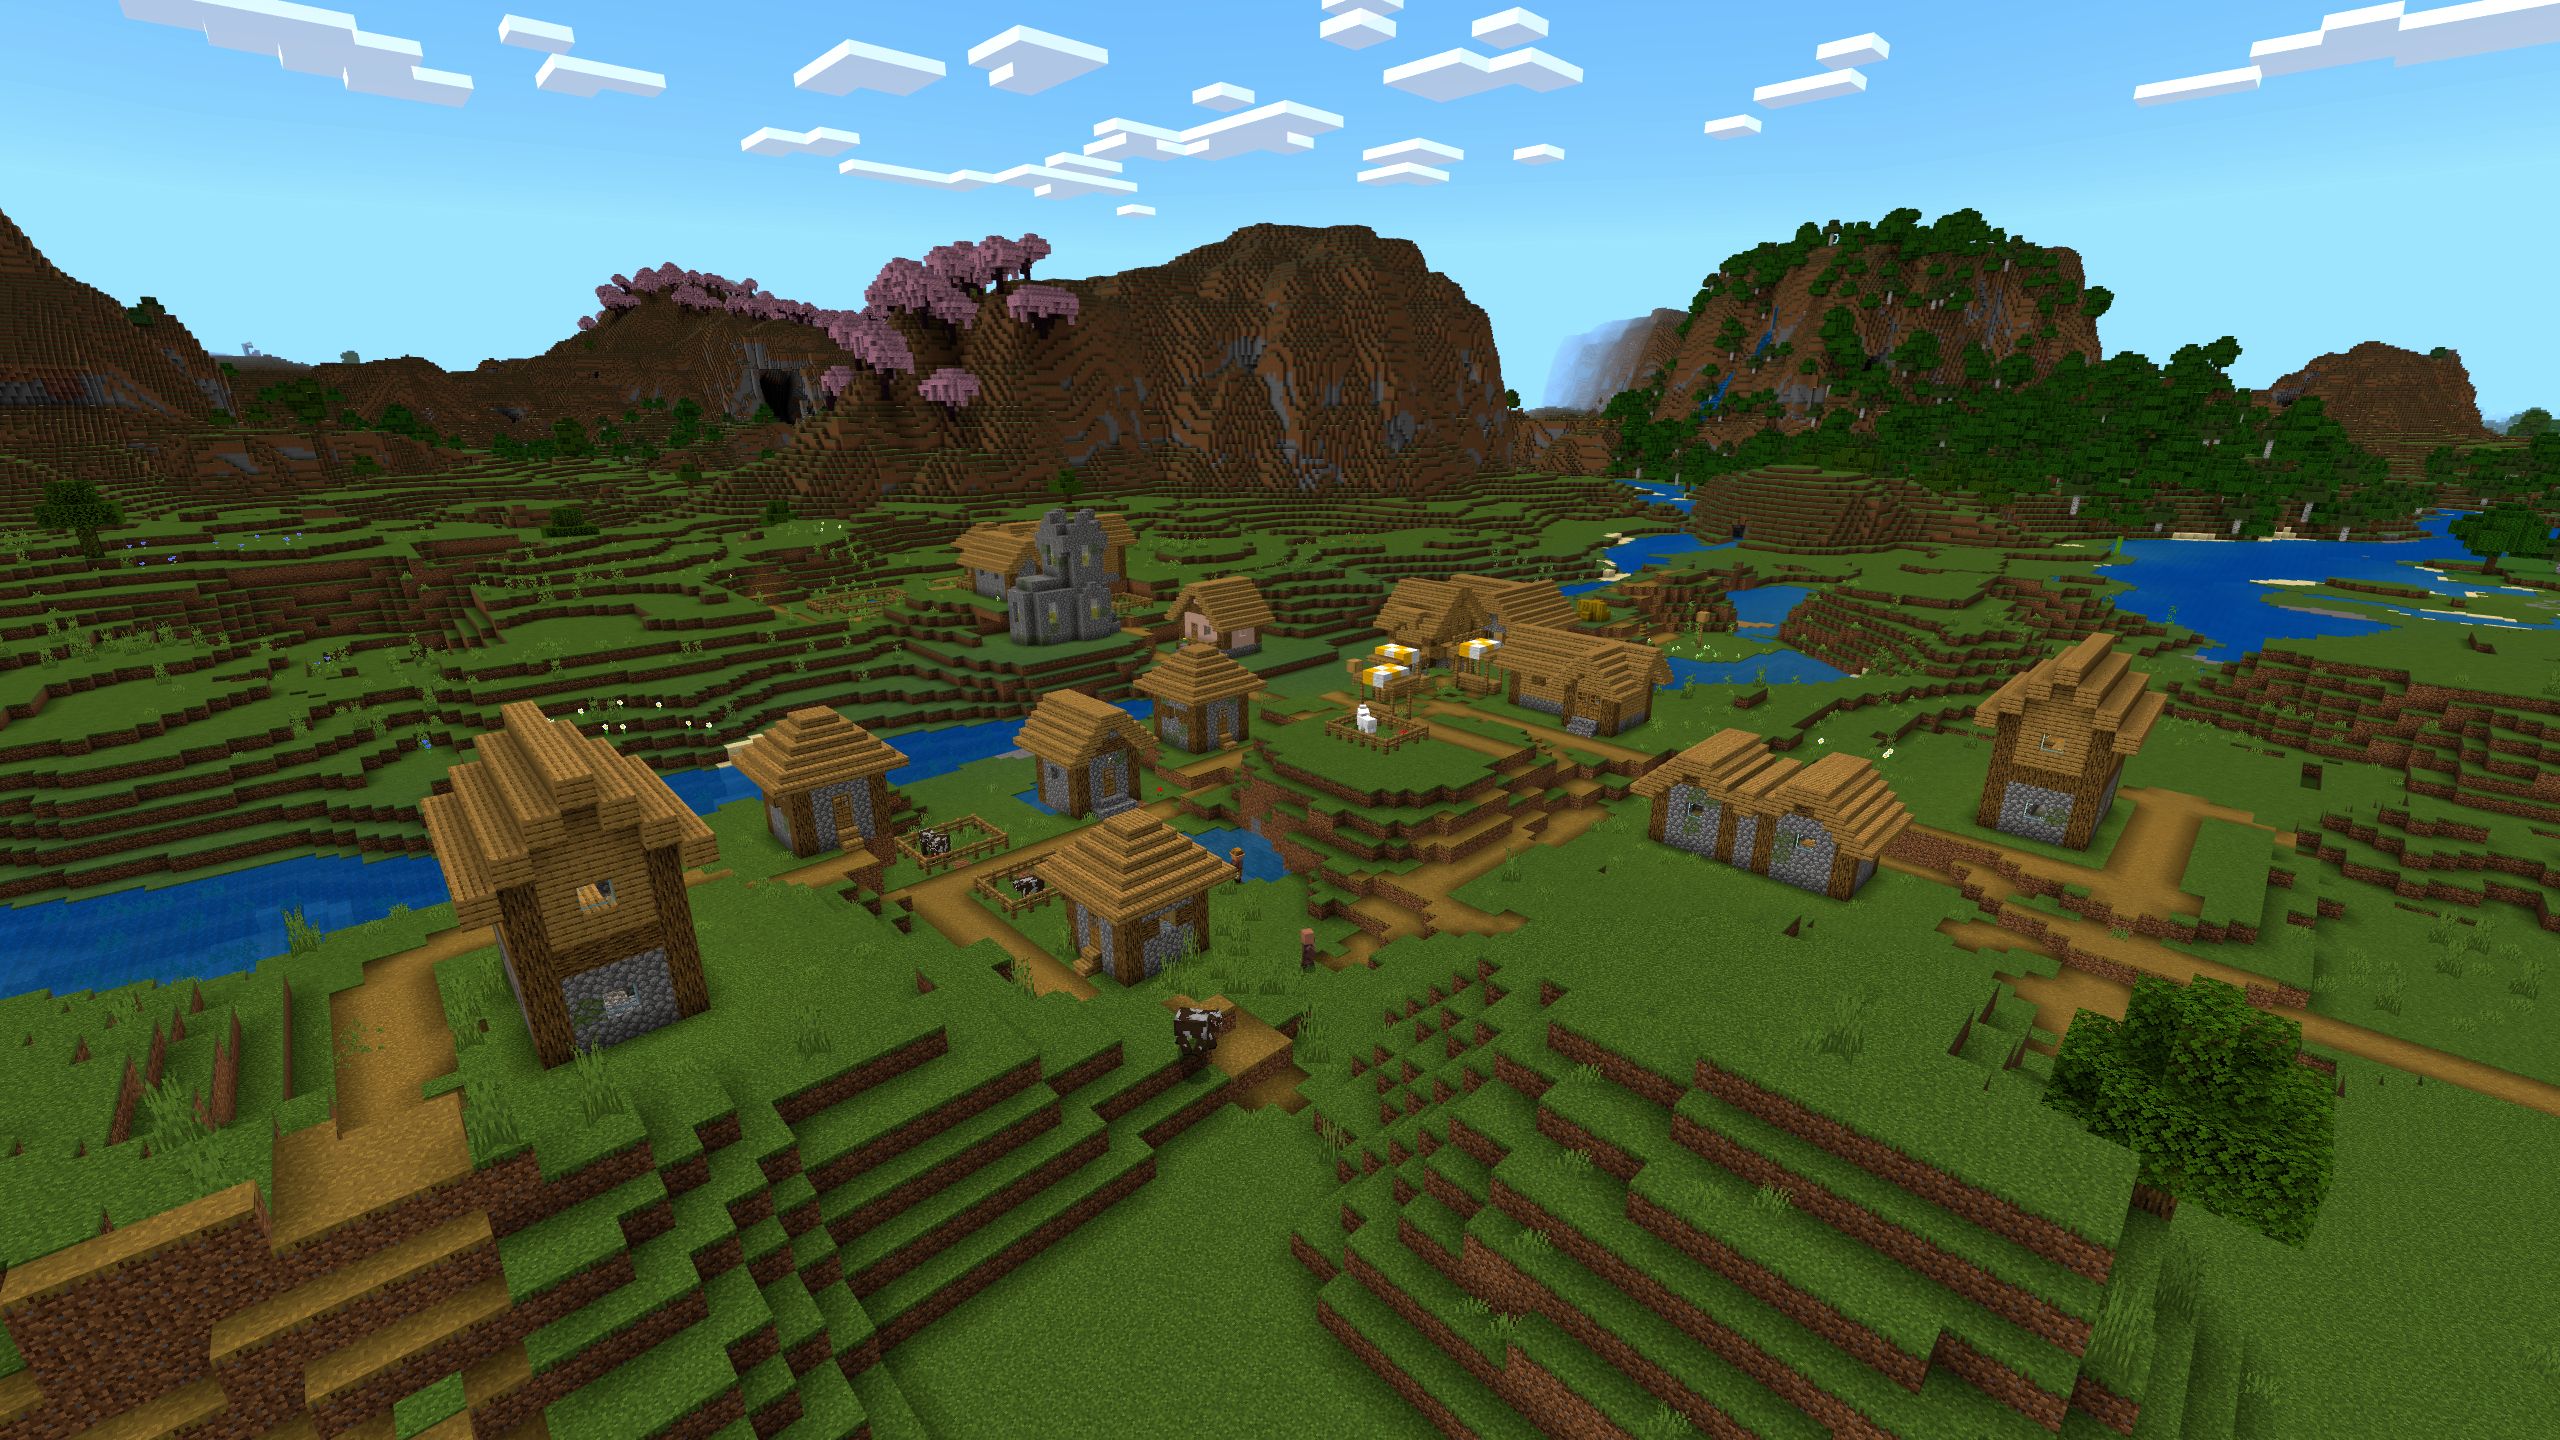 Minecraft Bedrock Edition Plains Village Near Hills With Cherry Blossom Trees